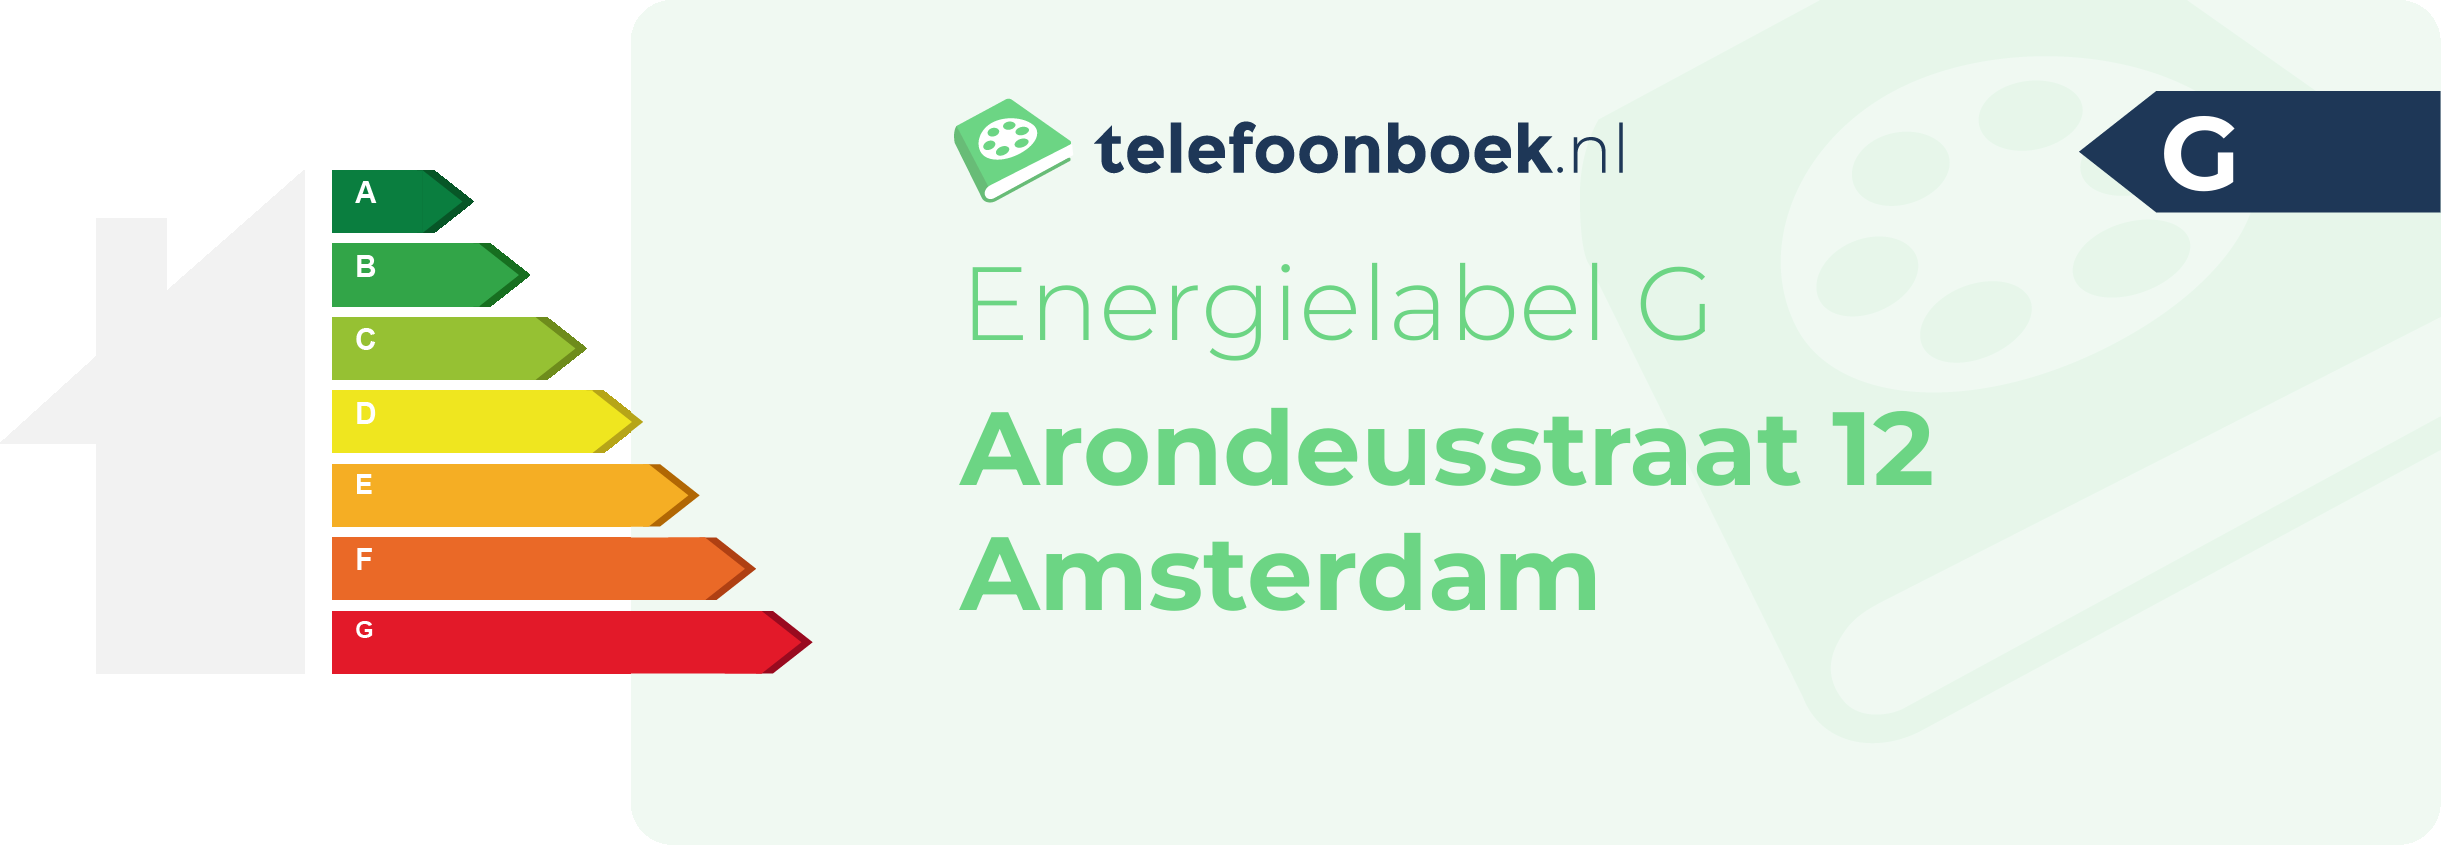 Energielabel Arondeusstraat 12 Amsterdam